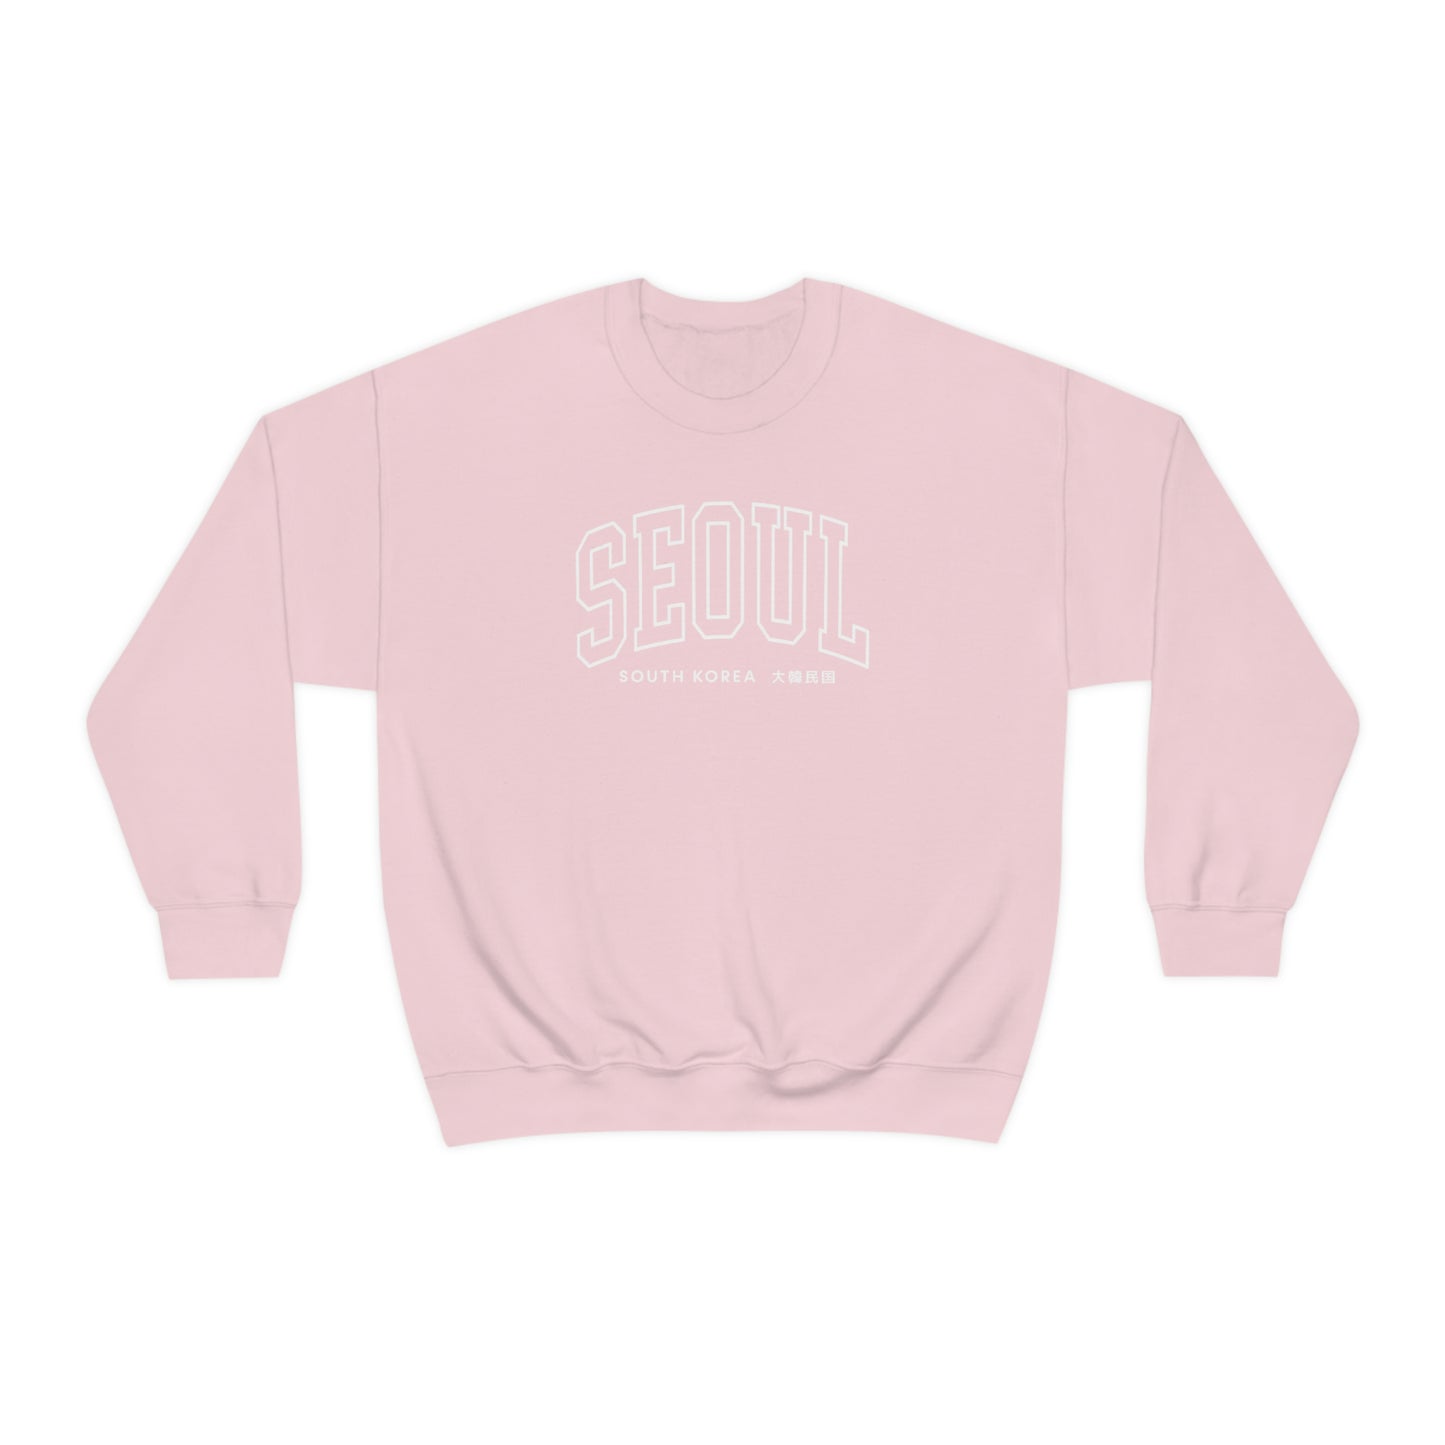 Seoul South Korea sweatshirt Unisex sweater Comfy Loose Fit Streetwear T-shirt K-Drama Multi-fandom K-pop birthday gift jumper